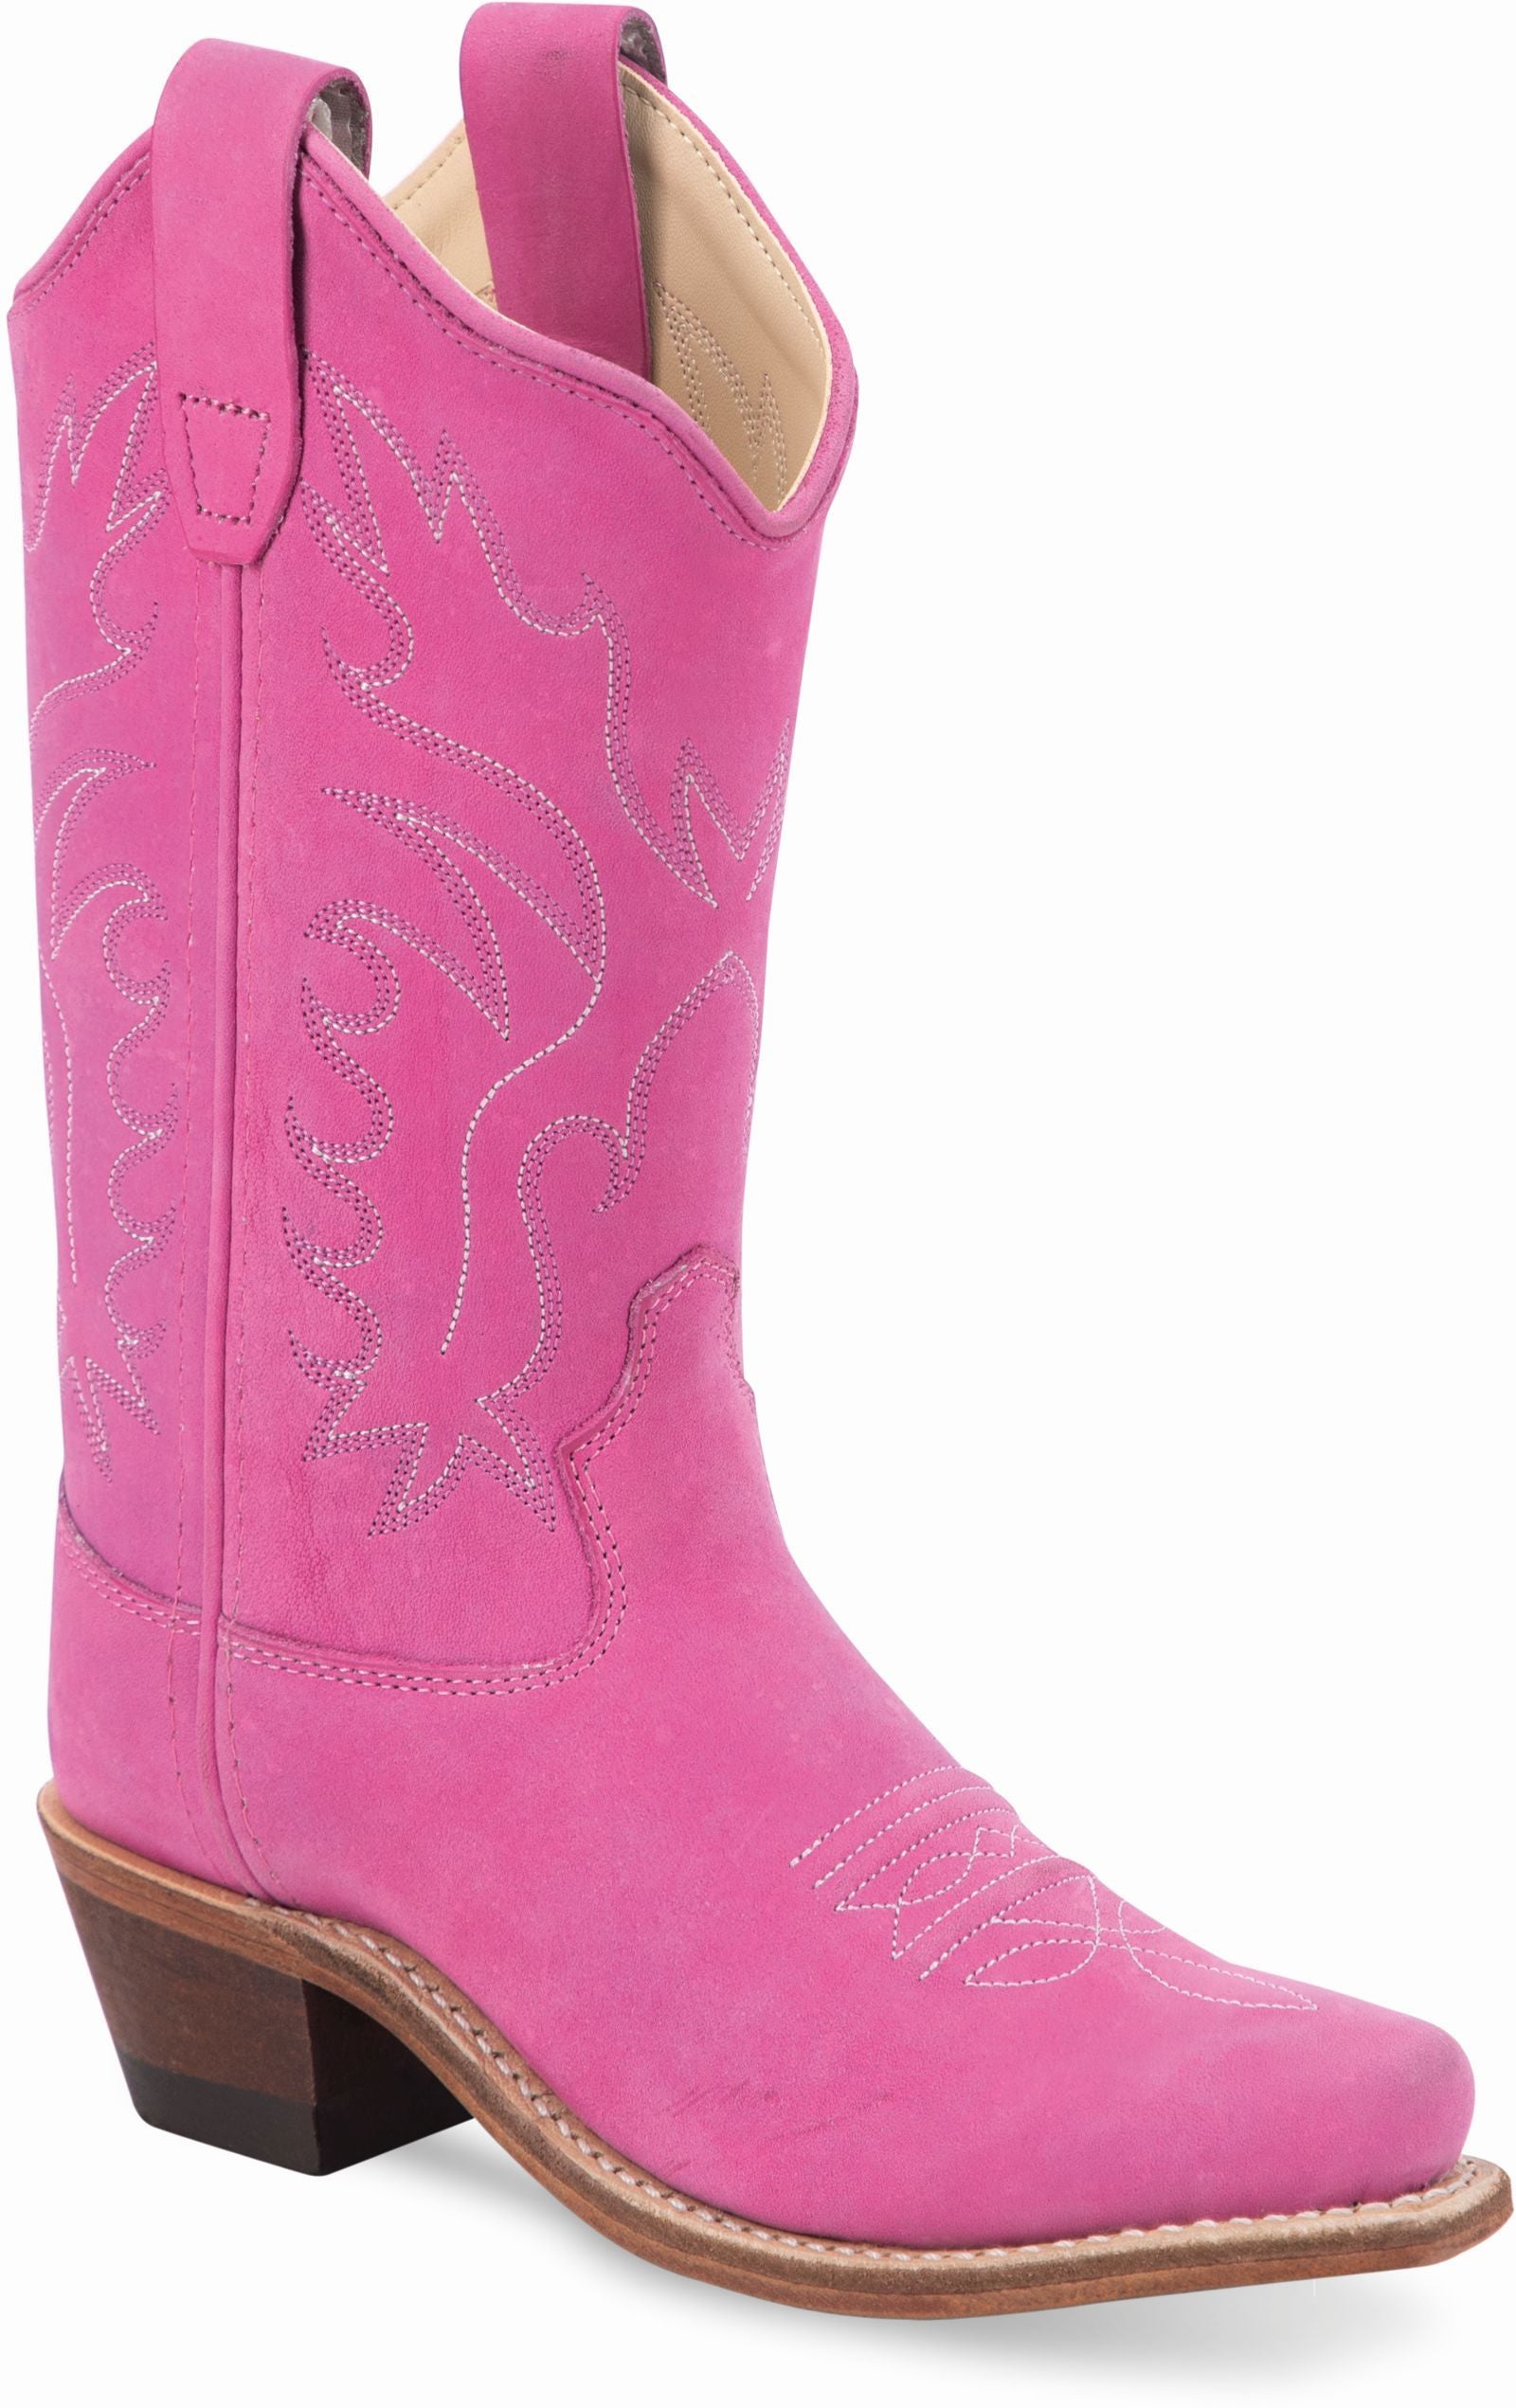 Old West Light Pink Children's Fashion Western Boots